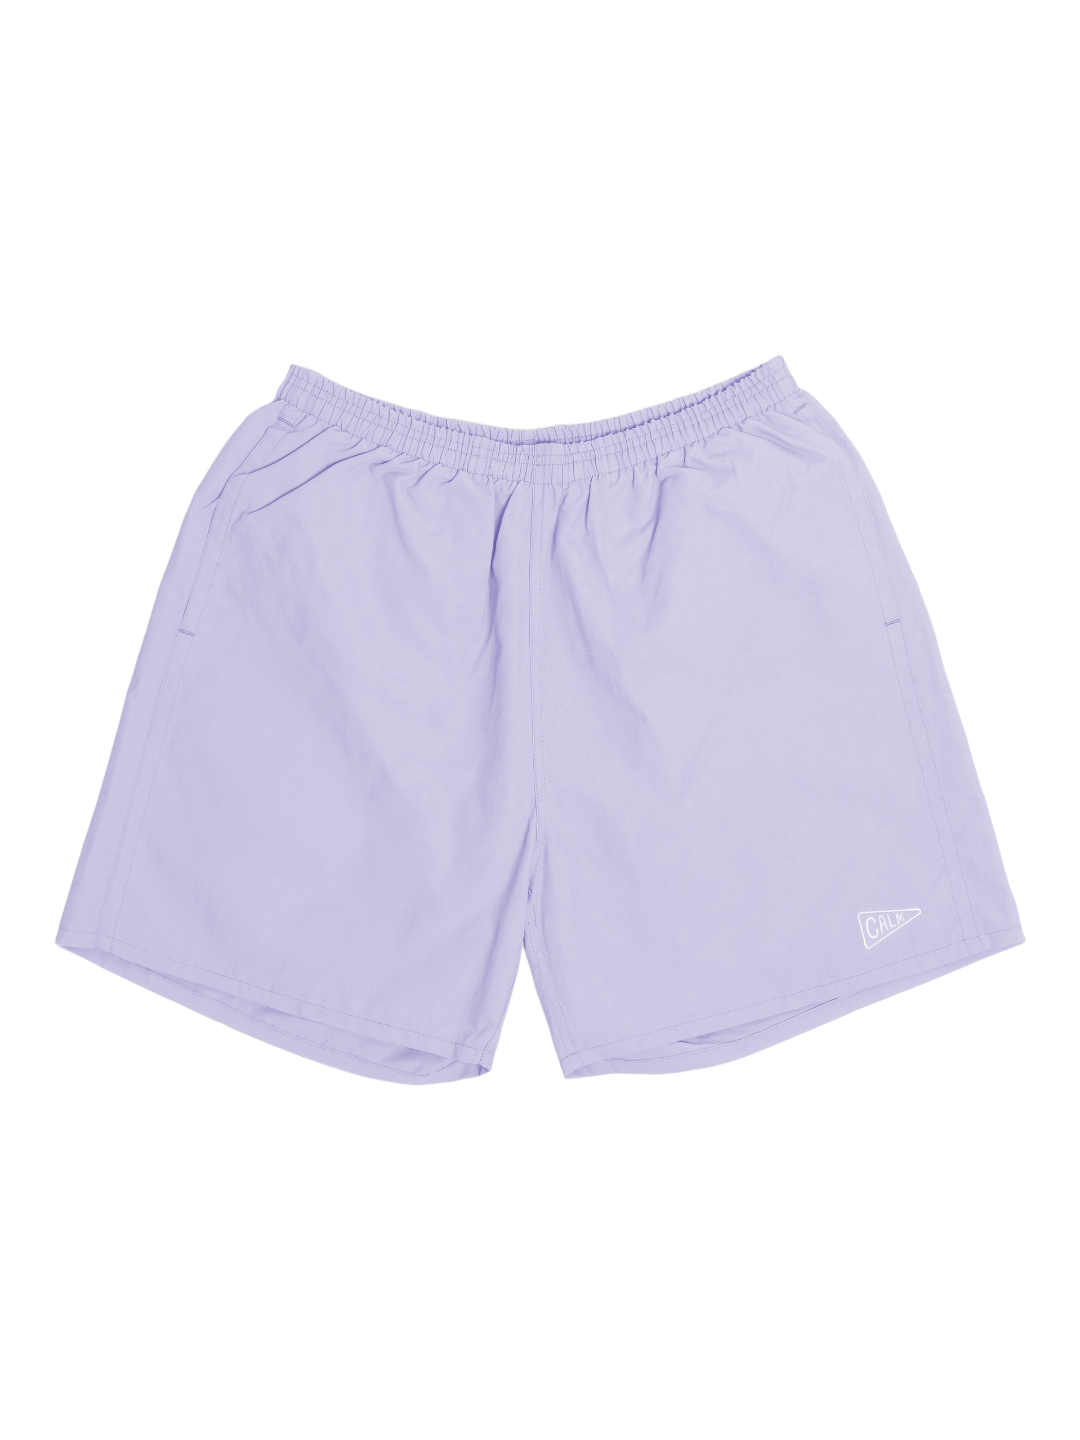 Calm outdoors Nylon Short Pants (Pastel Purple)